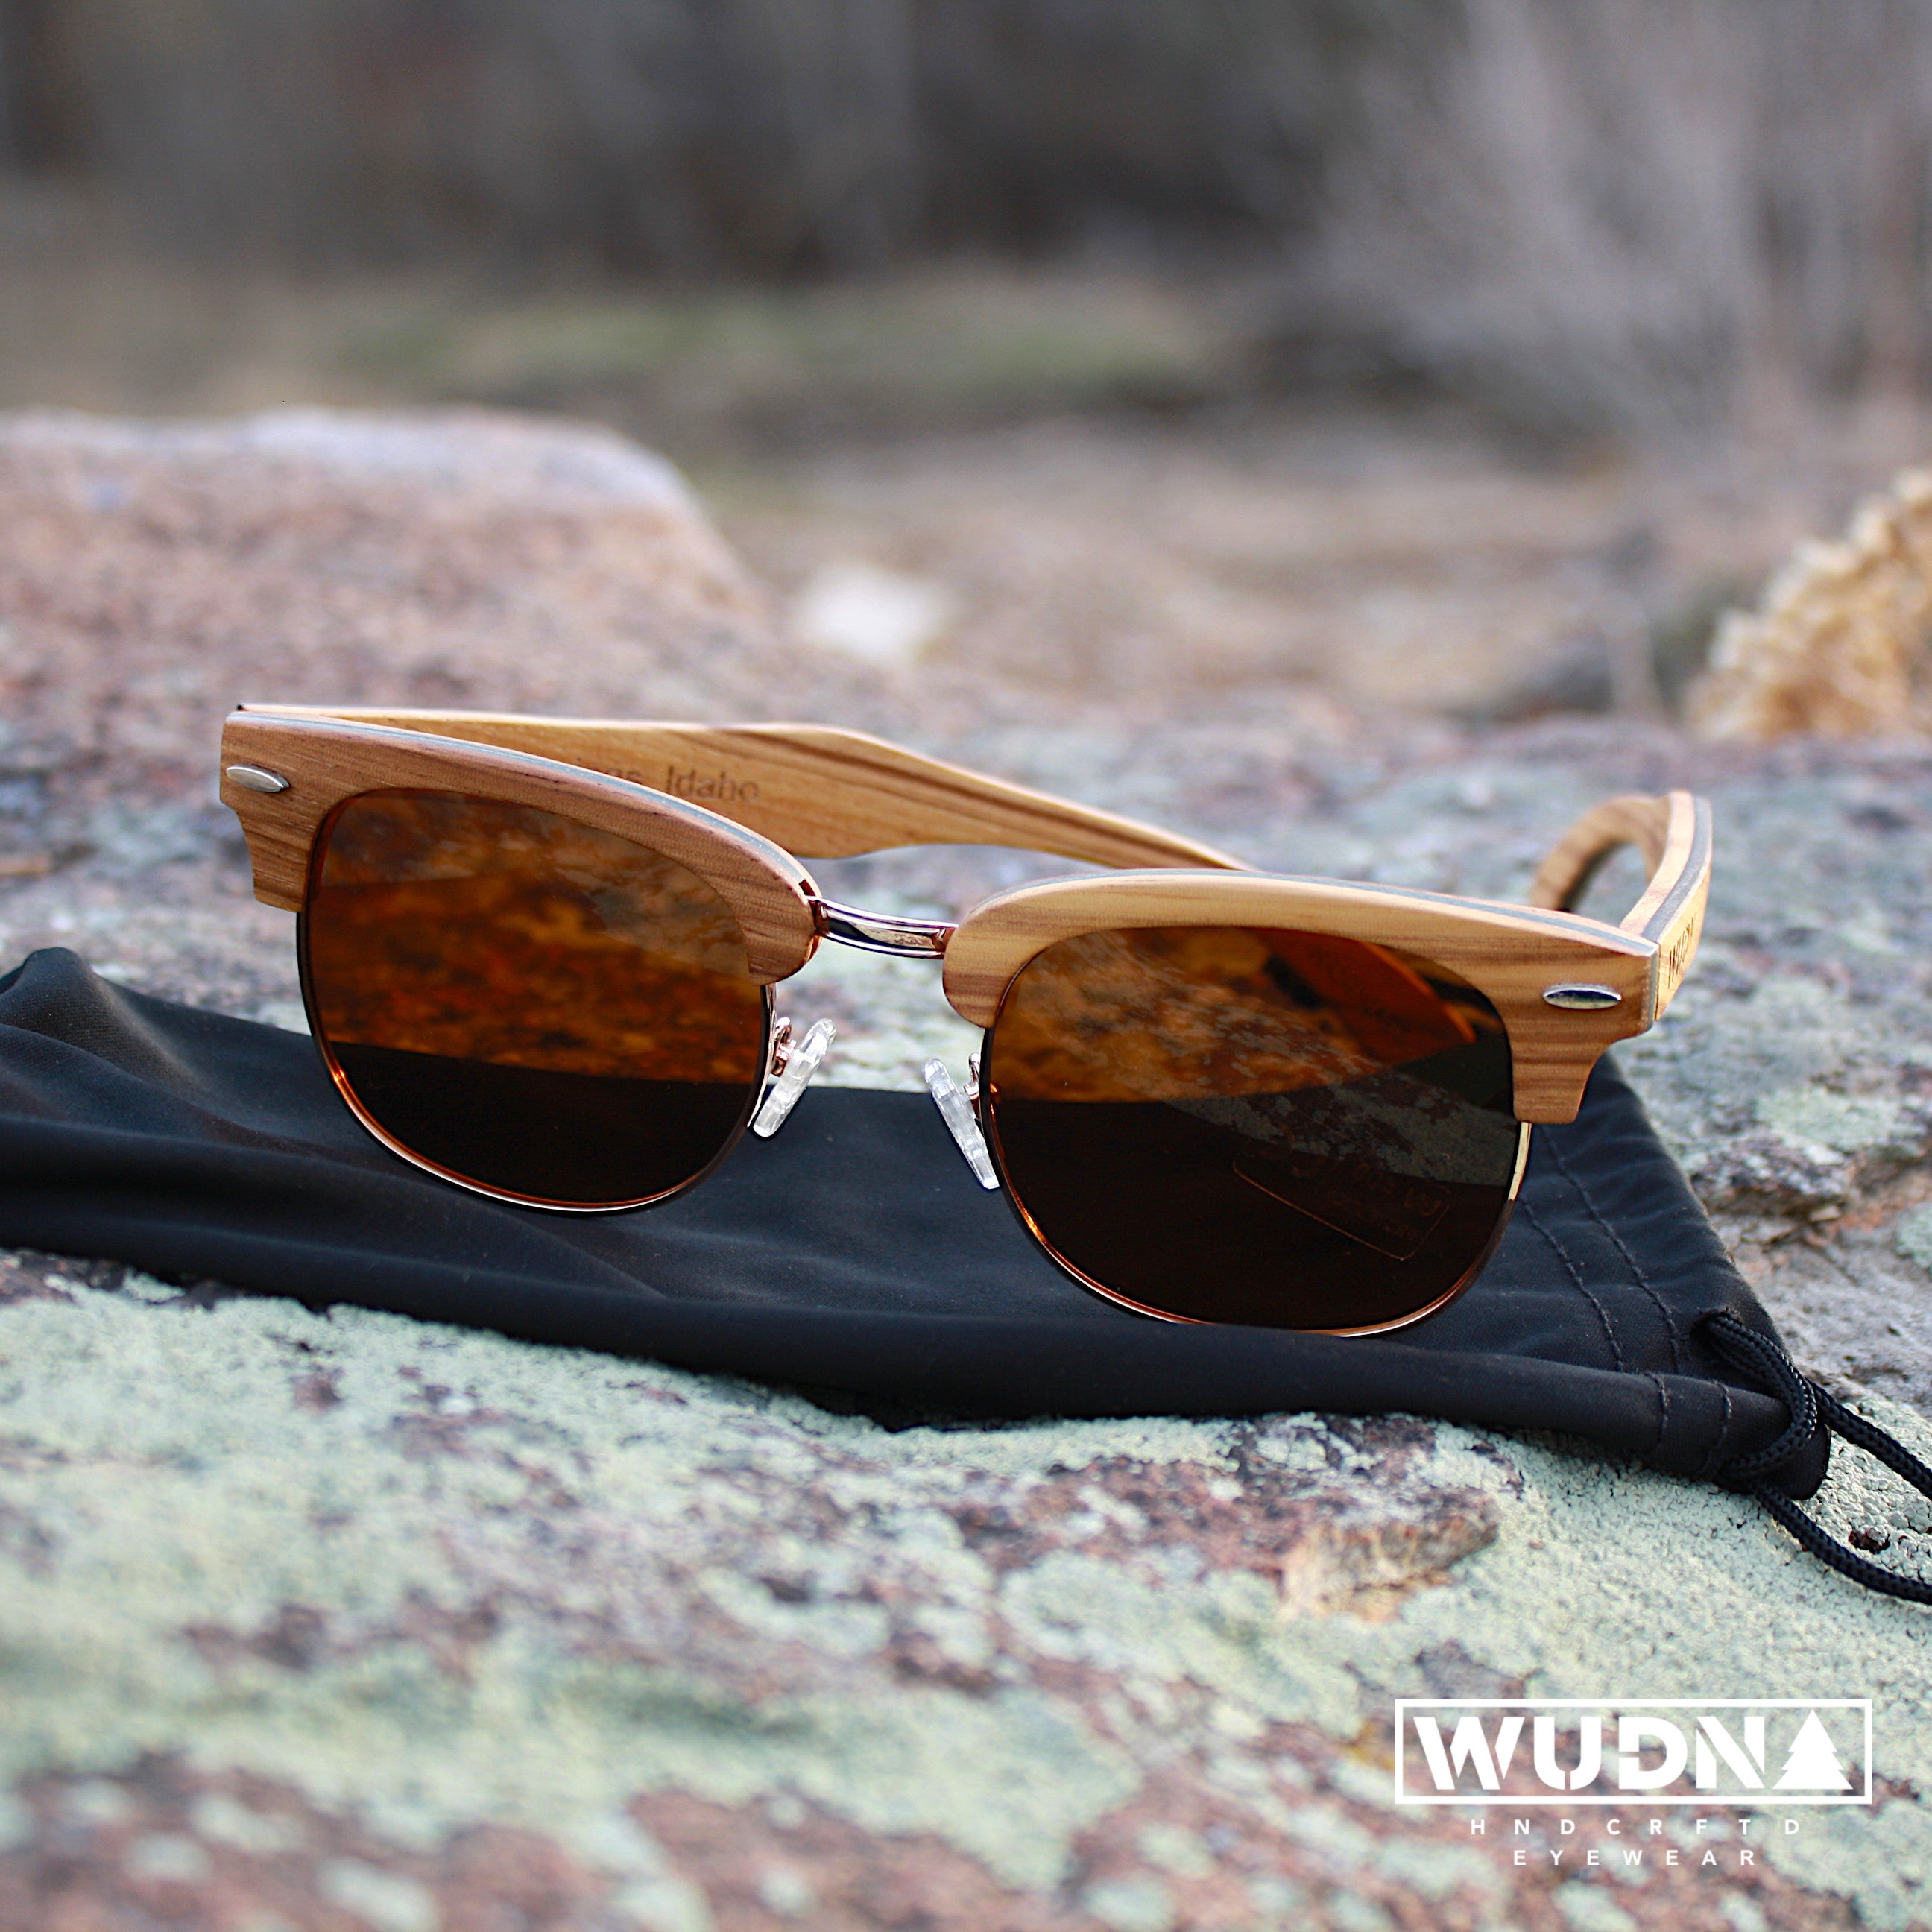 Real Zebra 1/2 Wood Vintage Browline RetroShade Sunglasses by WUDN